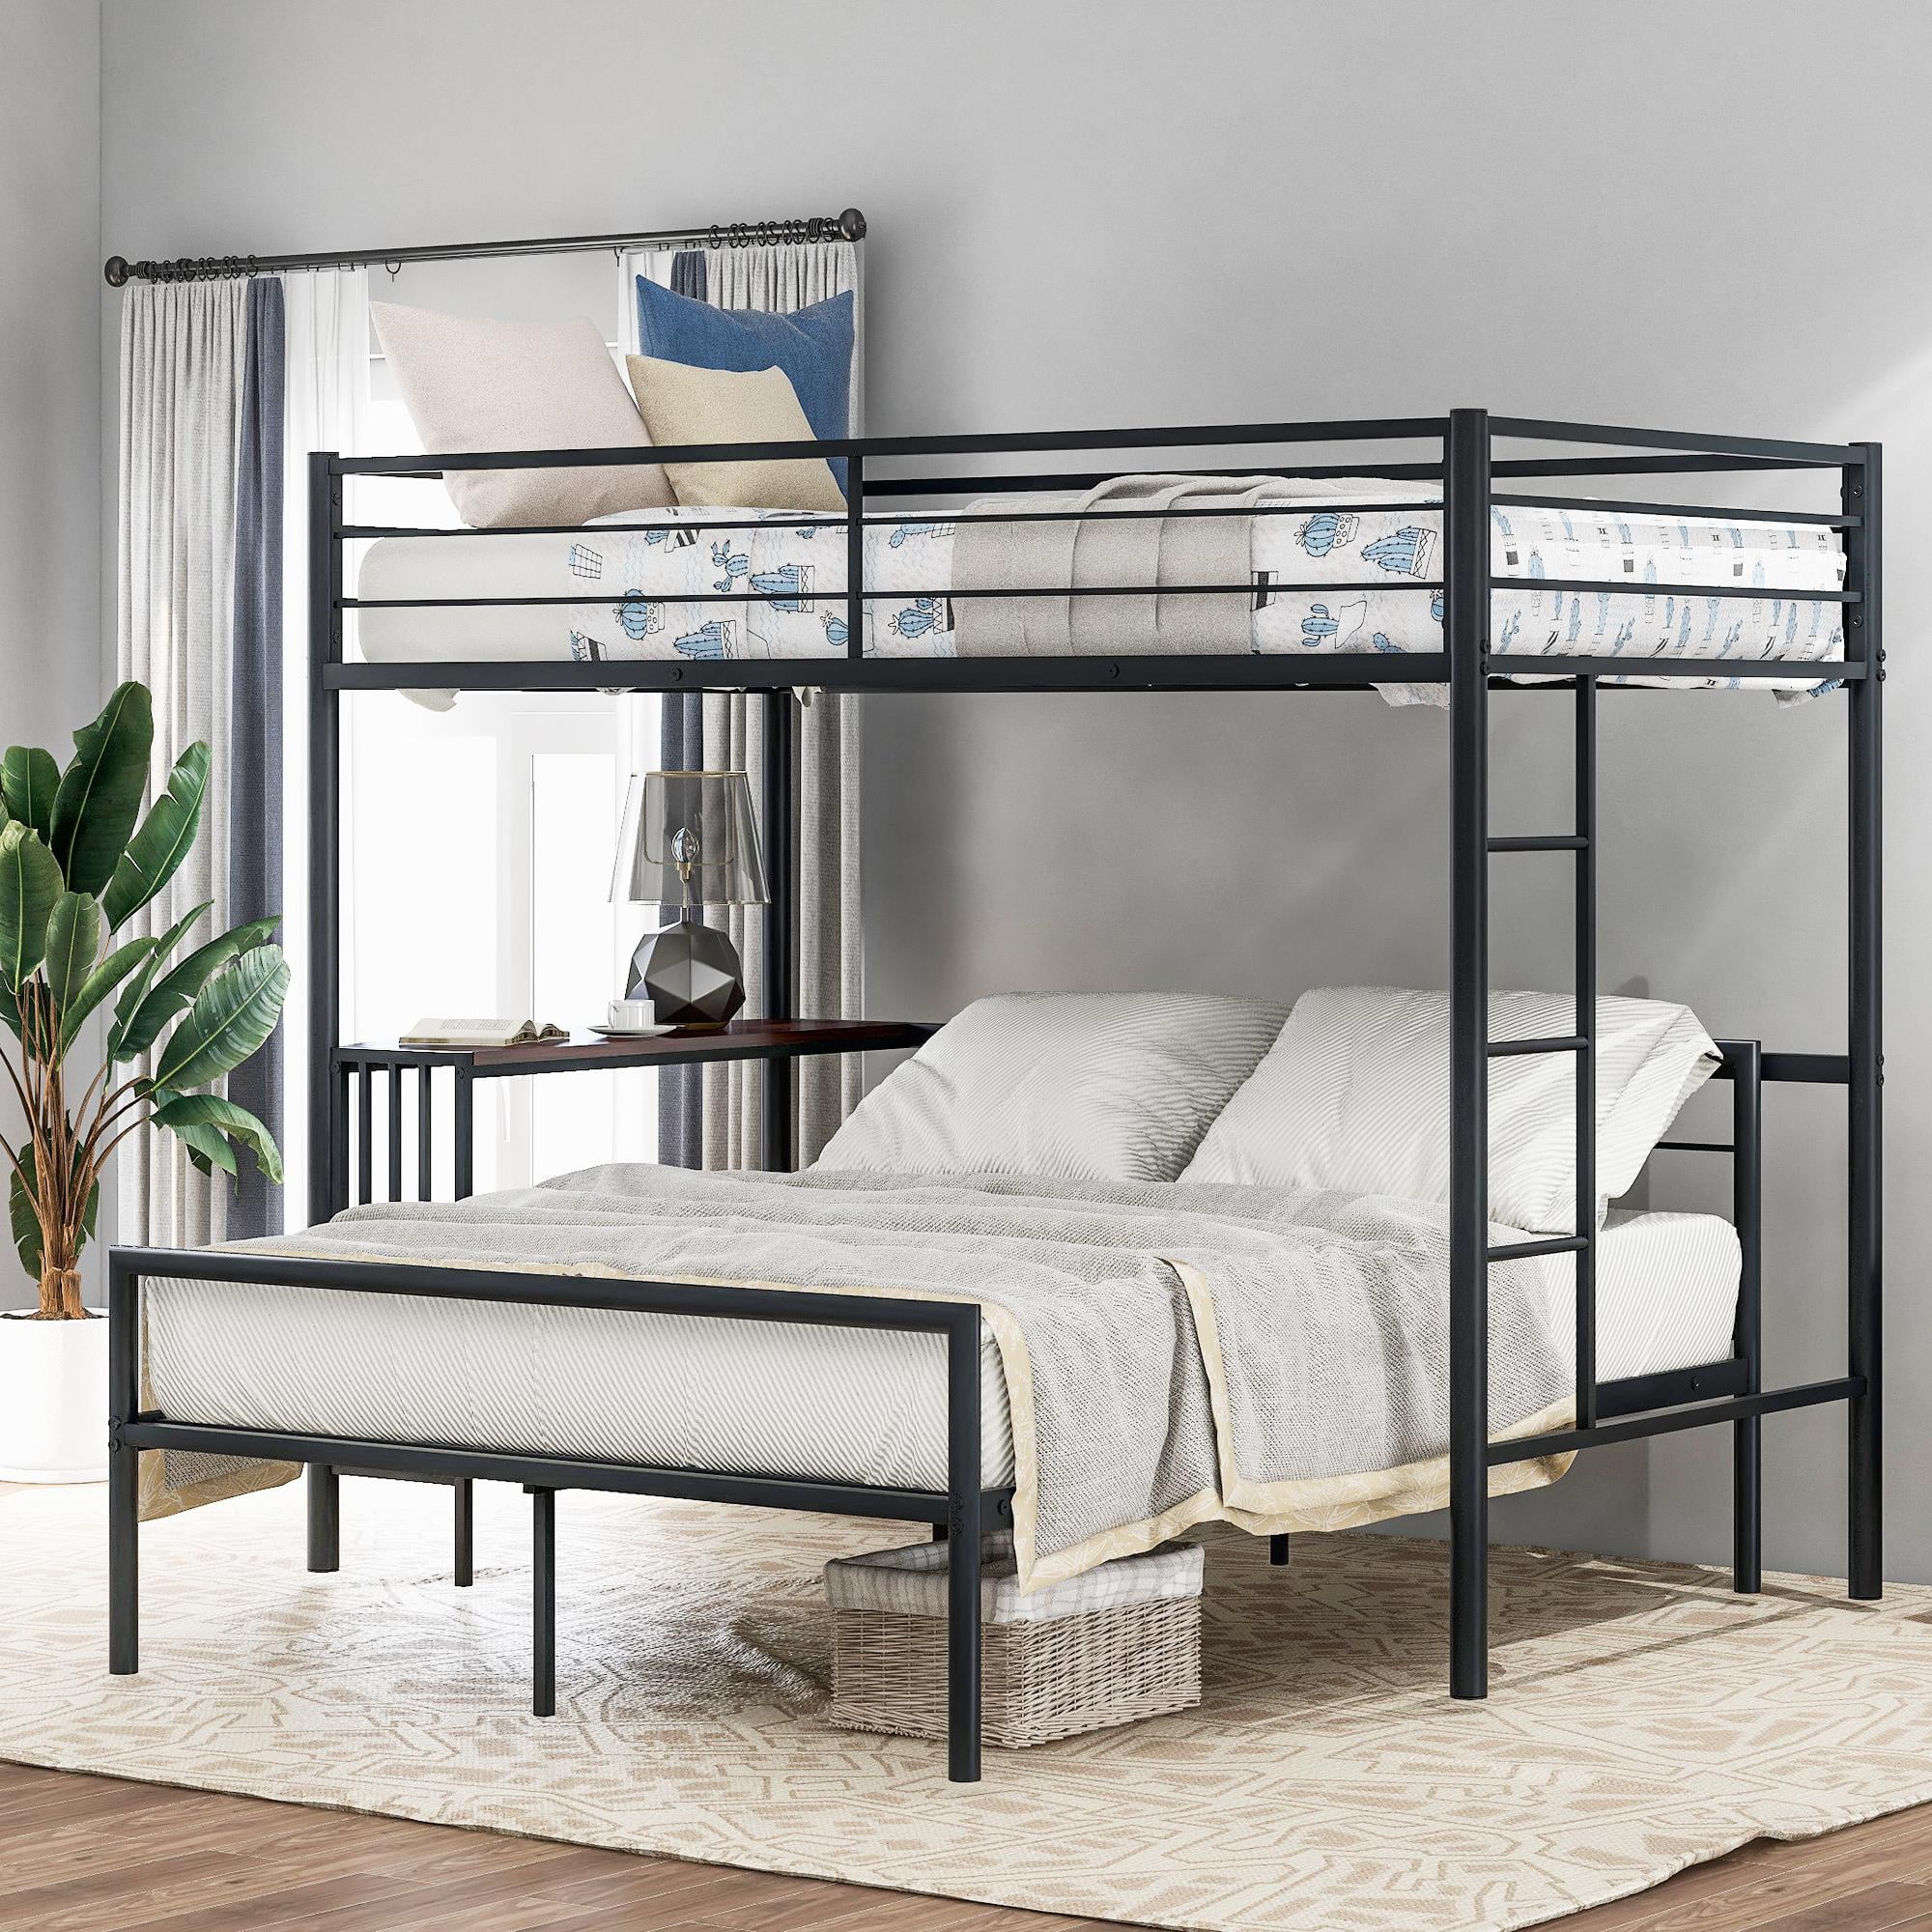 Triple Tree Wood Bunk Bed Adjustable, Adjustable Height Bunk Beds